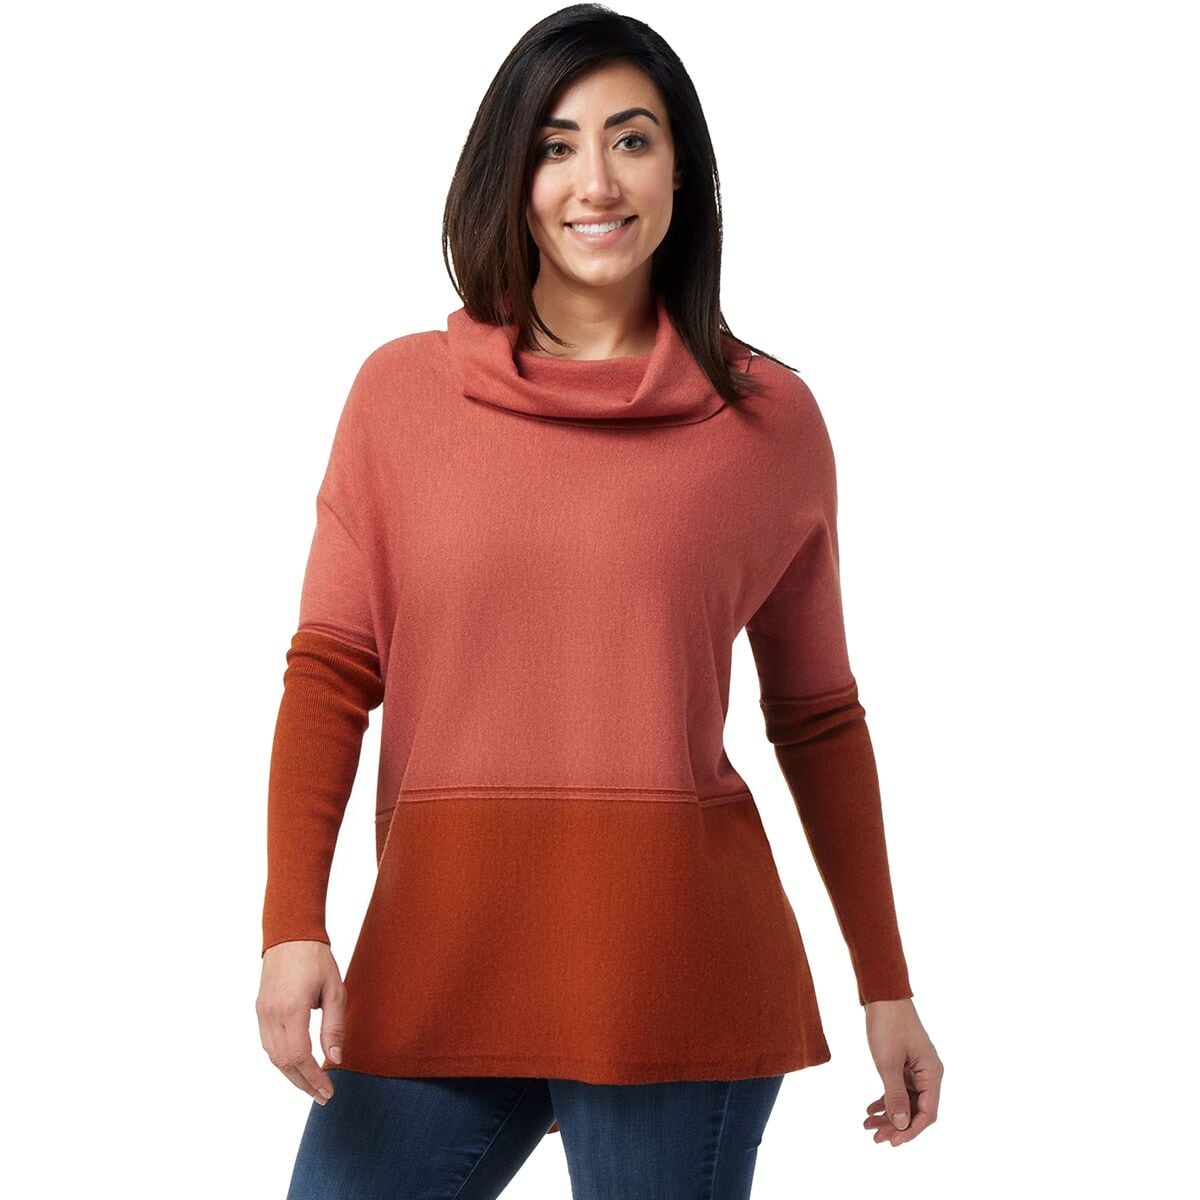 Edgewood Poncho Sweater - Women